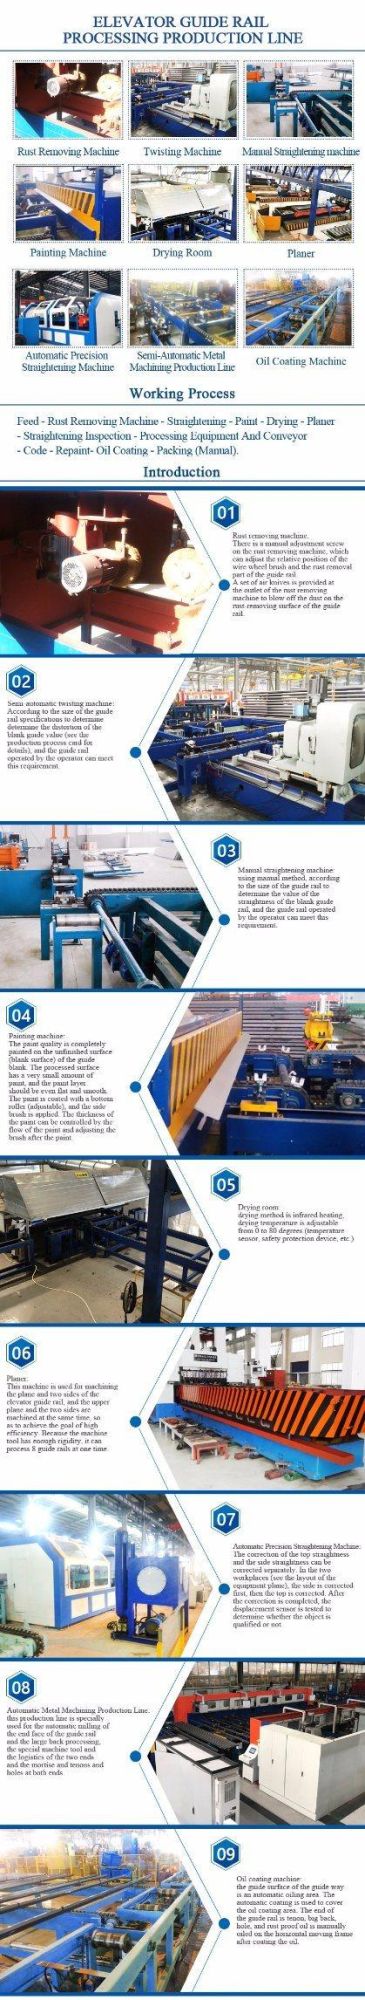 Direct Factory Selling Making Galvanized Steel Profile Flexible Elevator Guide Rail File Machine